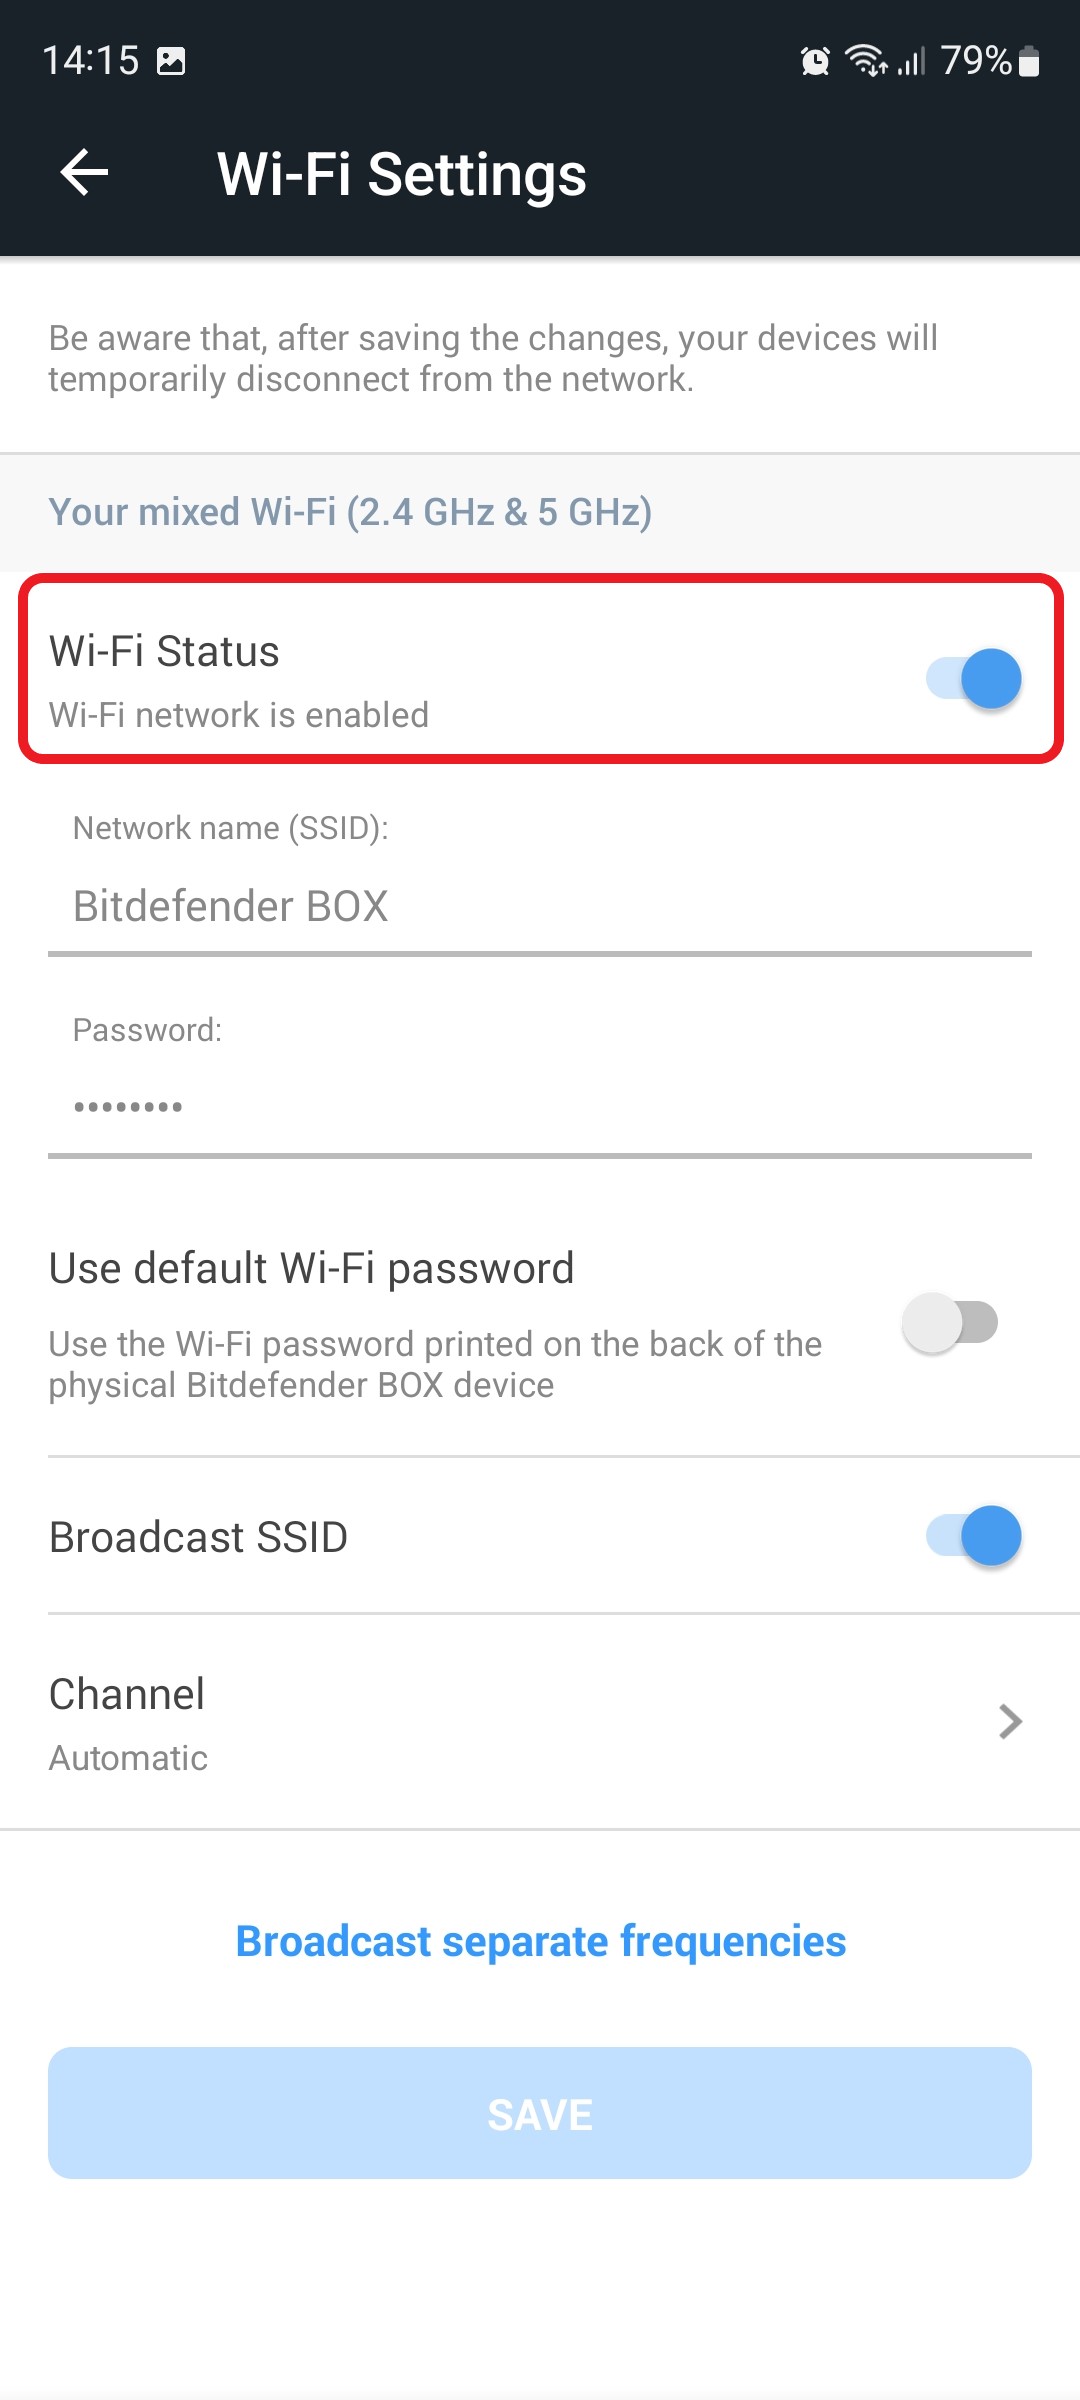 Wi-Fi Status allows you to turn Wi-Fi off or on - Bitdefender BOX